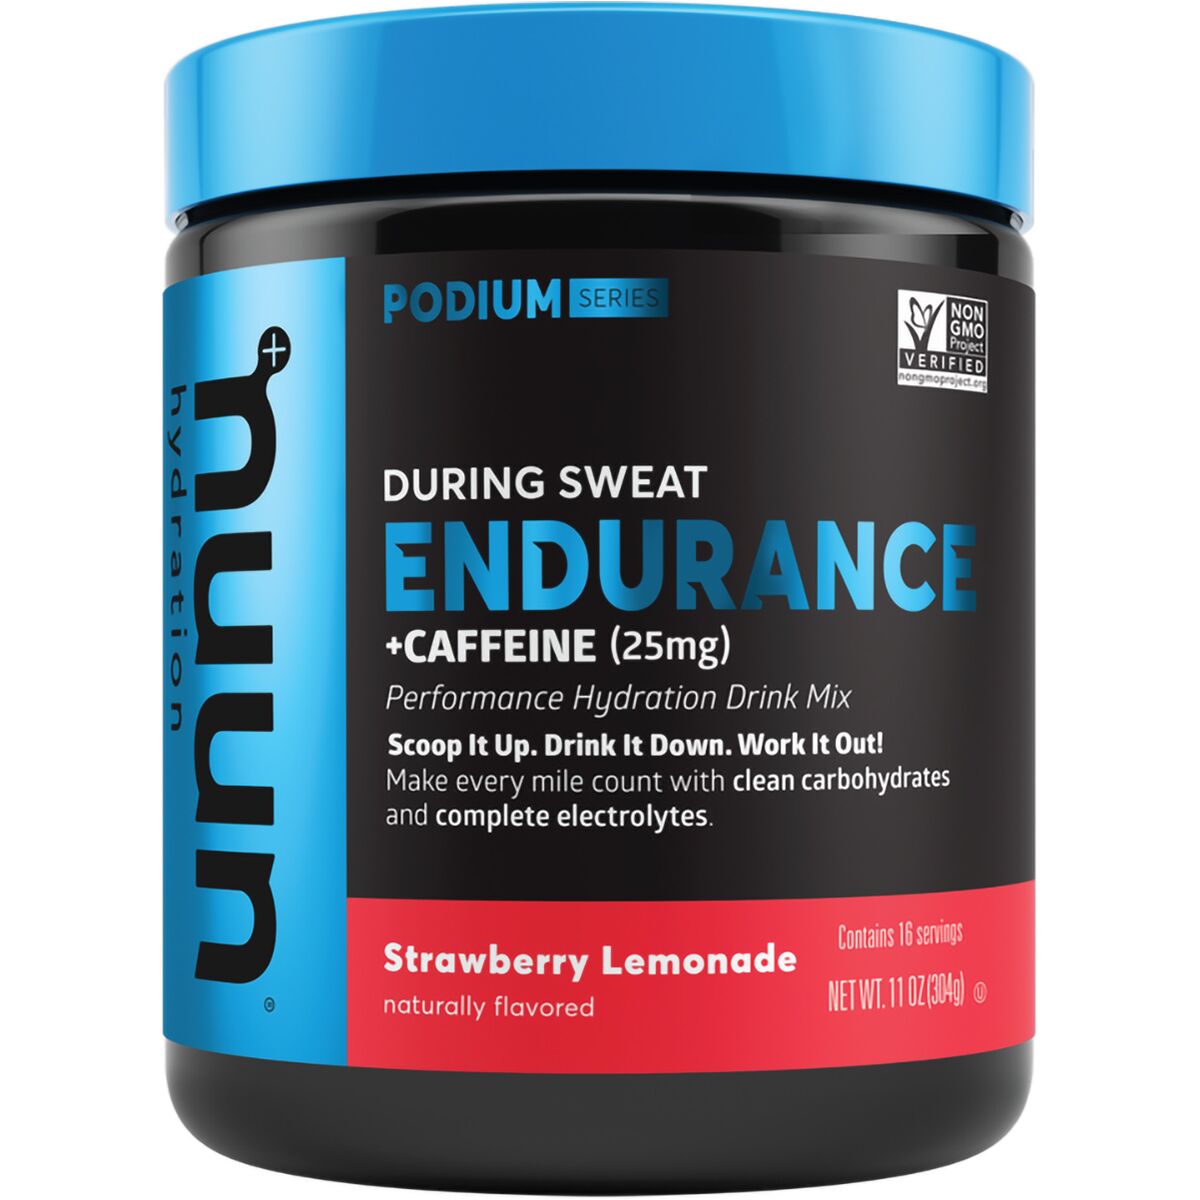 Nuun Endurance Hydration Drink Mix Strawberry Lemonade + Caffeine, 16 Serving Canister